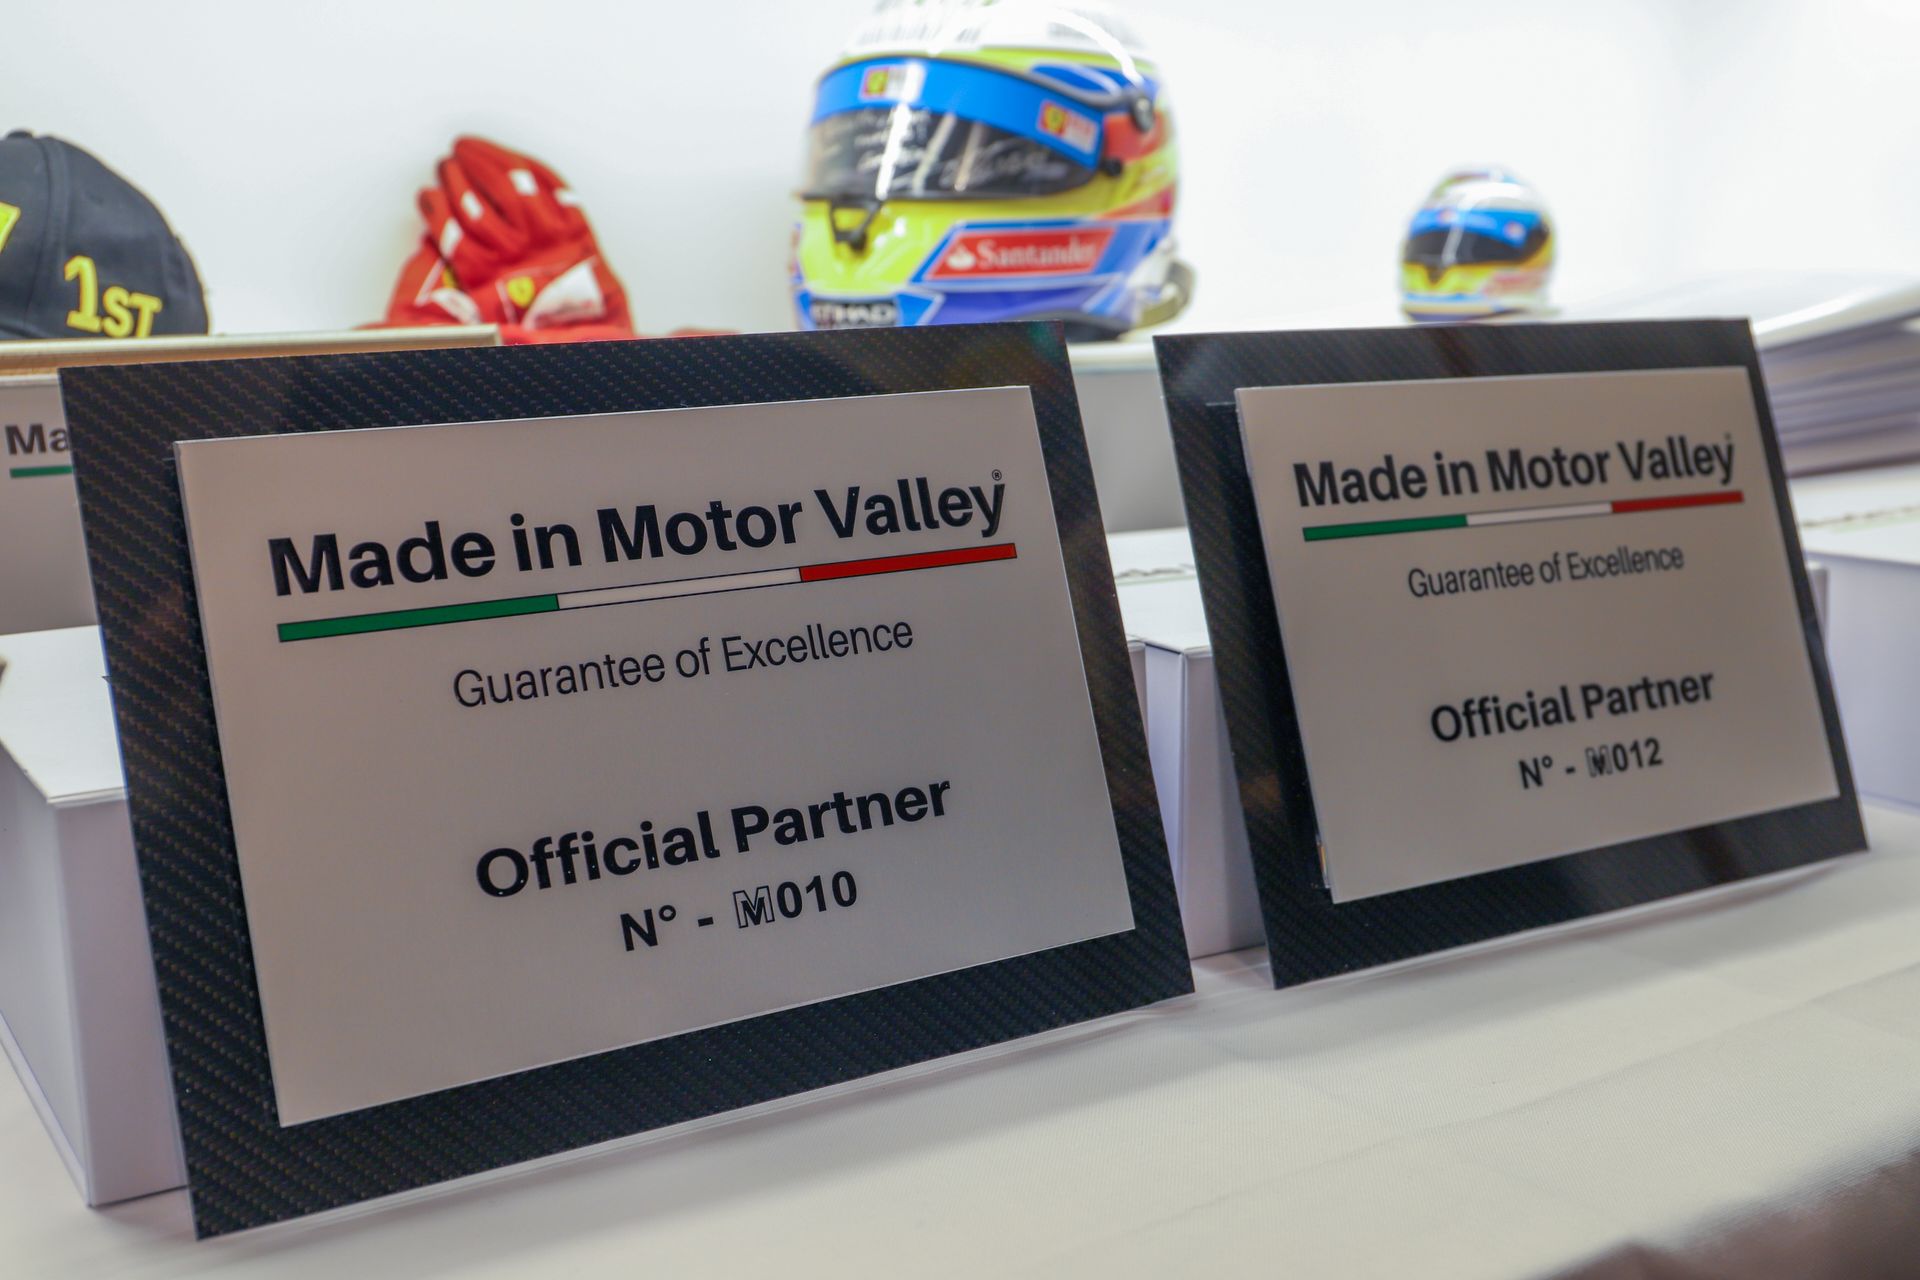 Algumas das primeiras placas de empresas que aderiram ao projeto "Made in Motor Valley"